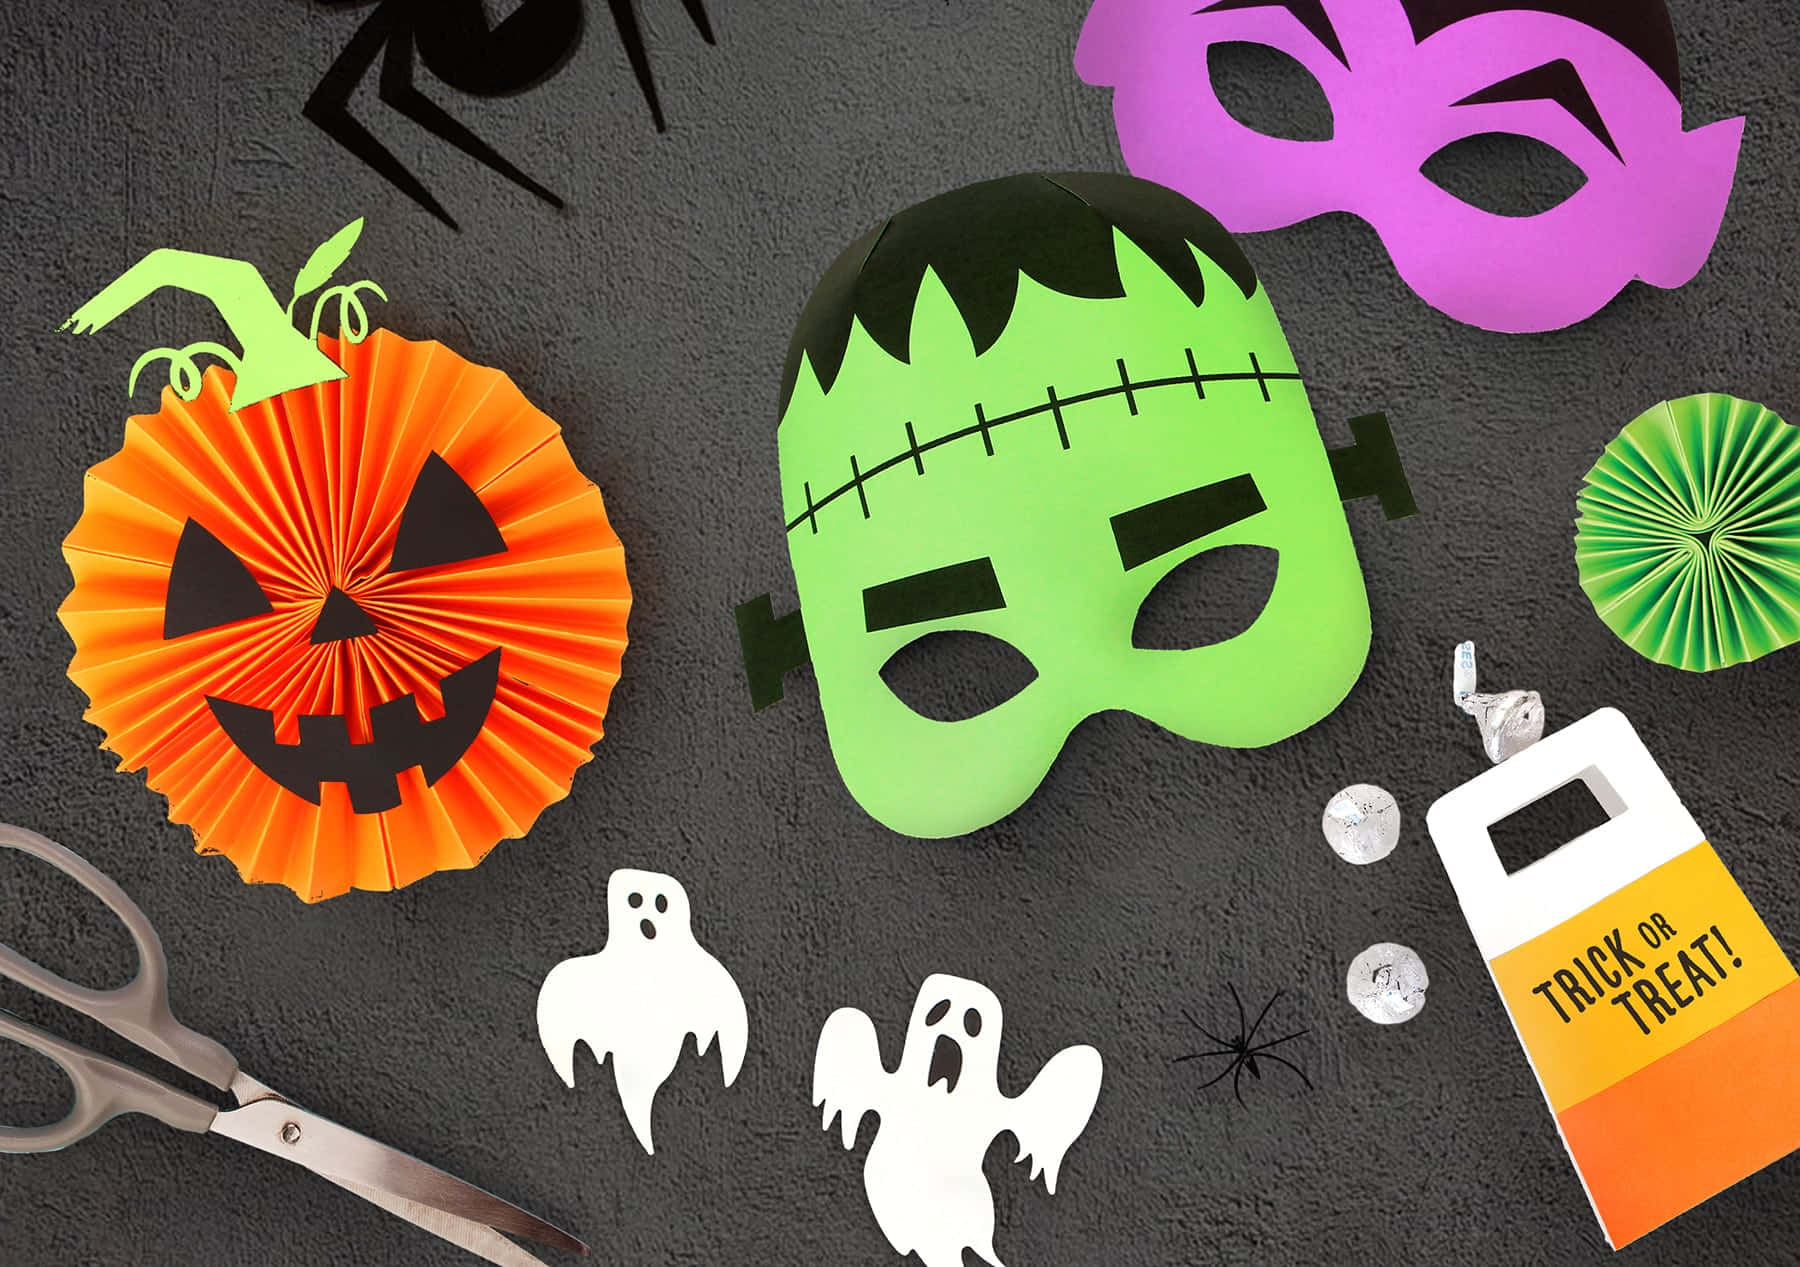 "Create fun + spooky spirit with DIY Halloween crafts!" Wallpaper